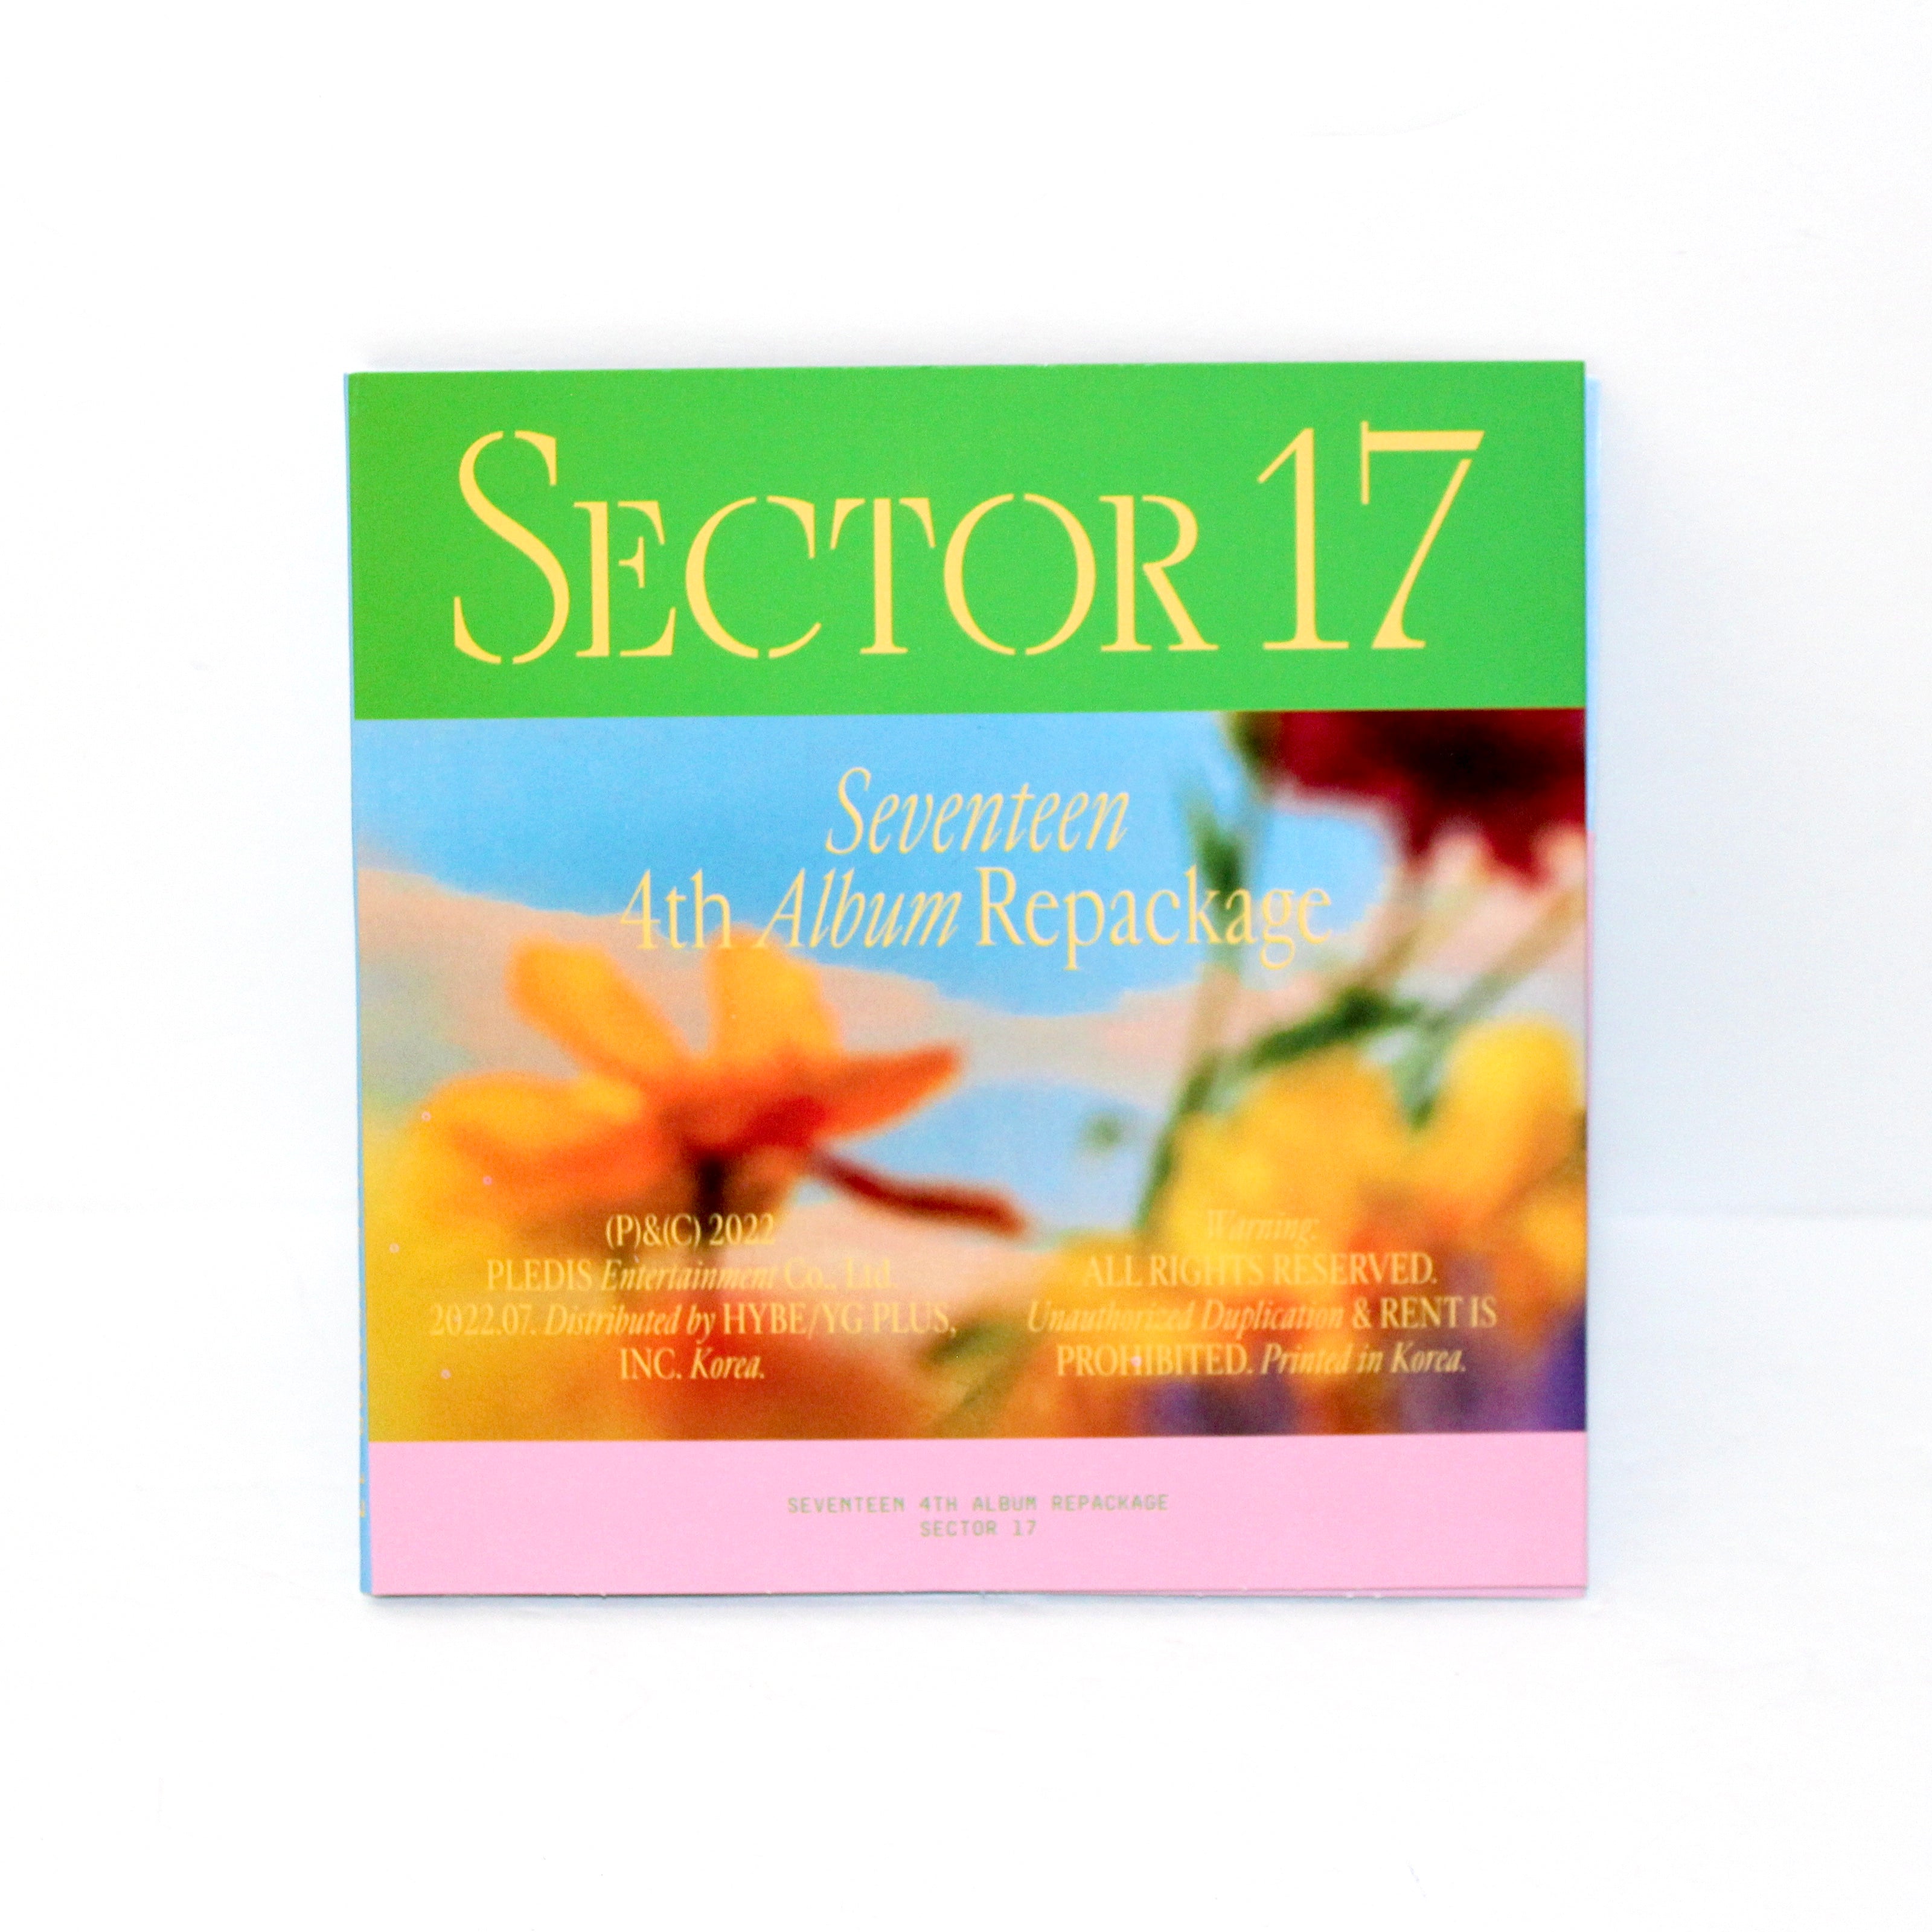 SEVENTEEN 4th Album Repackage: Sector 17 Compact Ver. – K-Universe